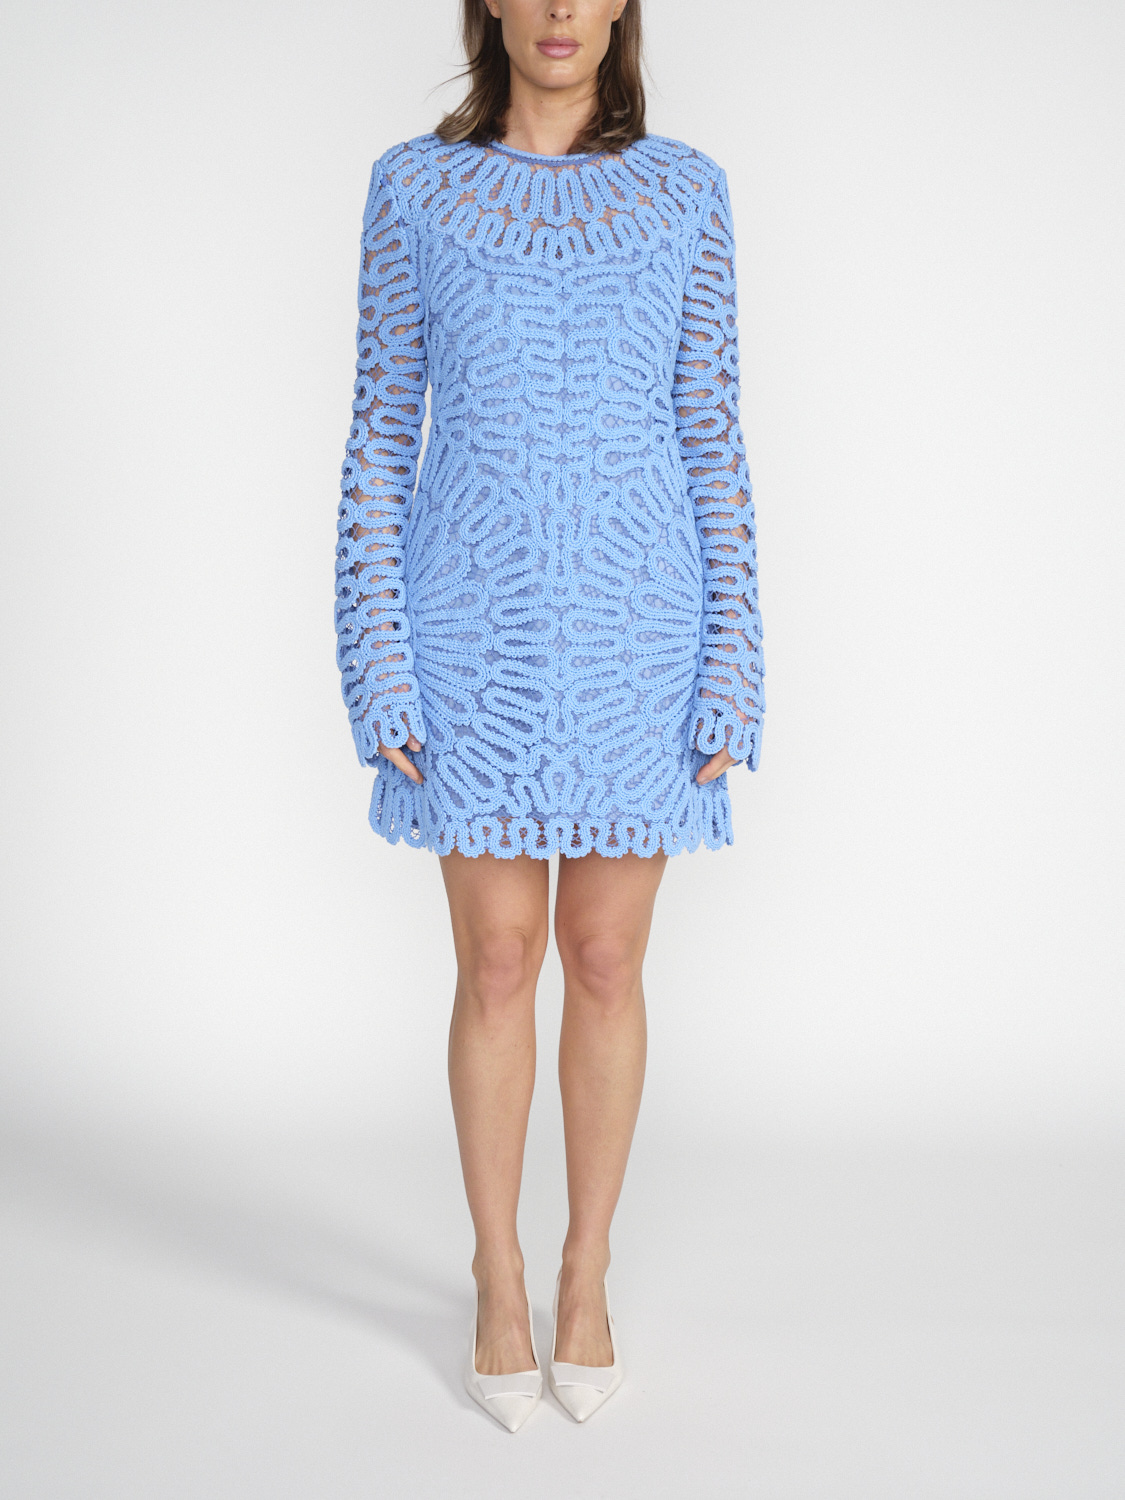 Simkhai Mccall – Dress with mechanical crochet embroidery  blue 38